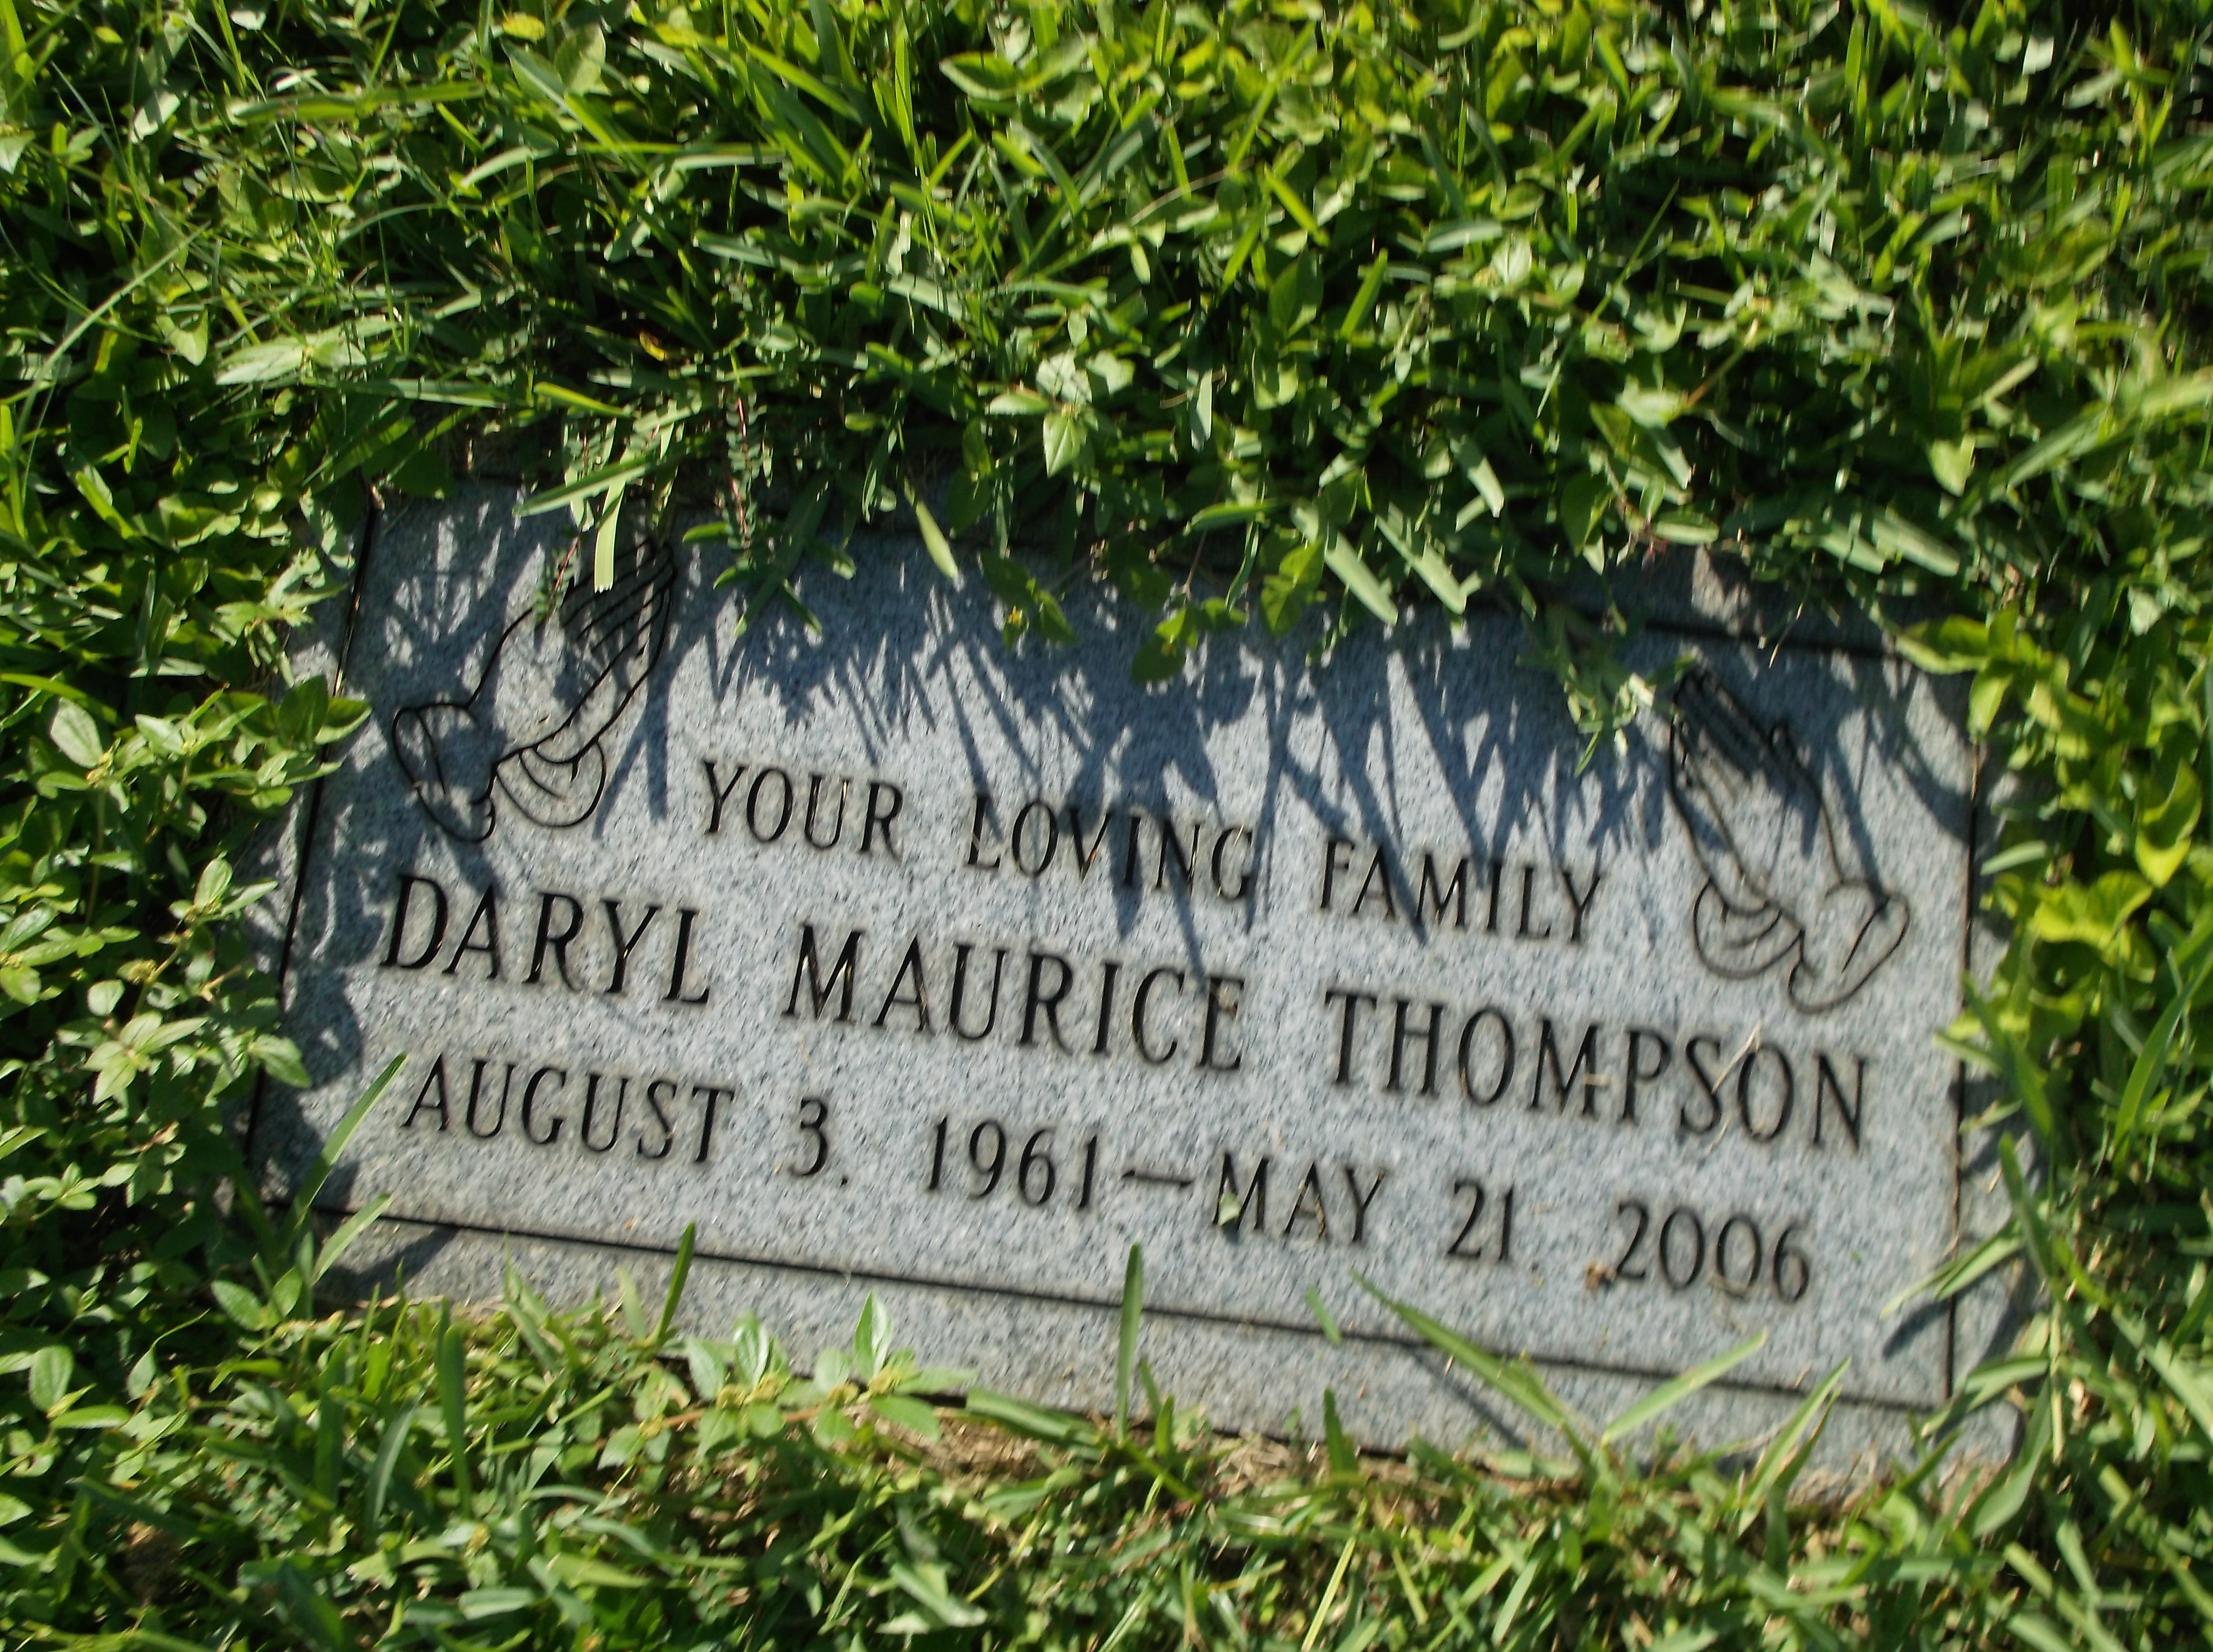 Daryl Maurice Thompson